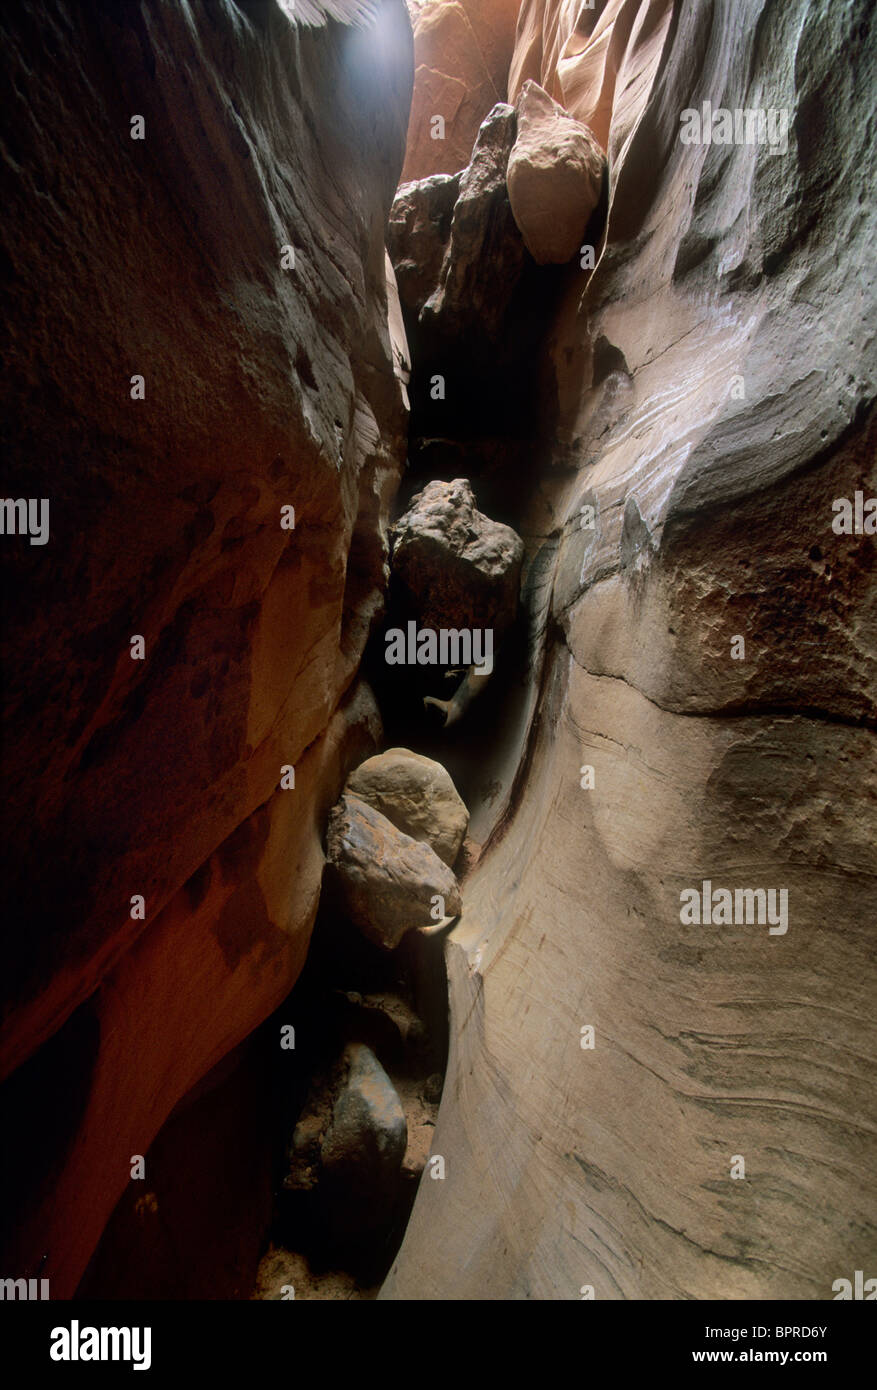 Aron ralston canyon hi-res stock photography and images - Alamy